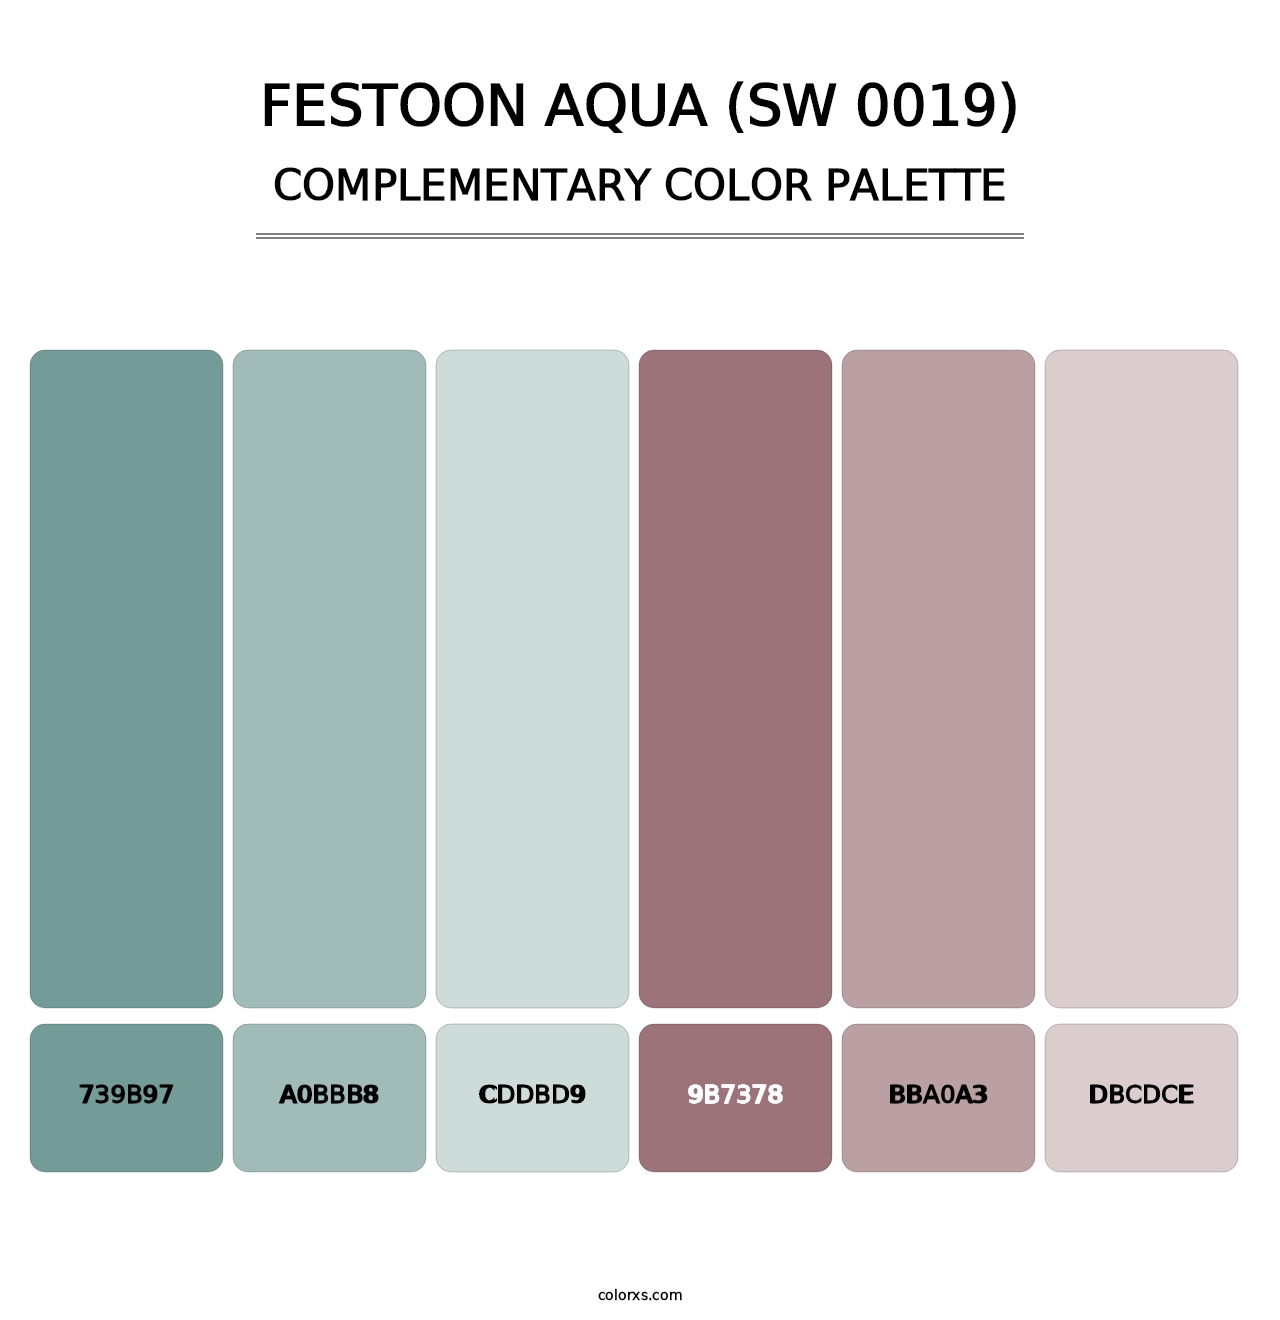 Festoon Aqua (SW 0019) - Complementary Color Palette